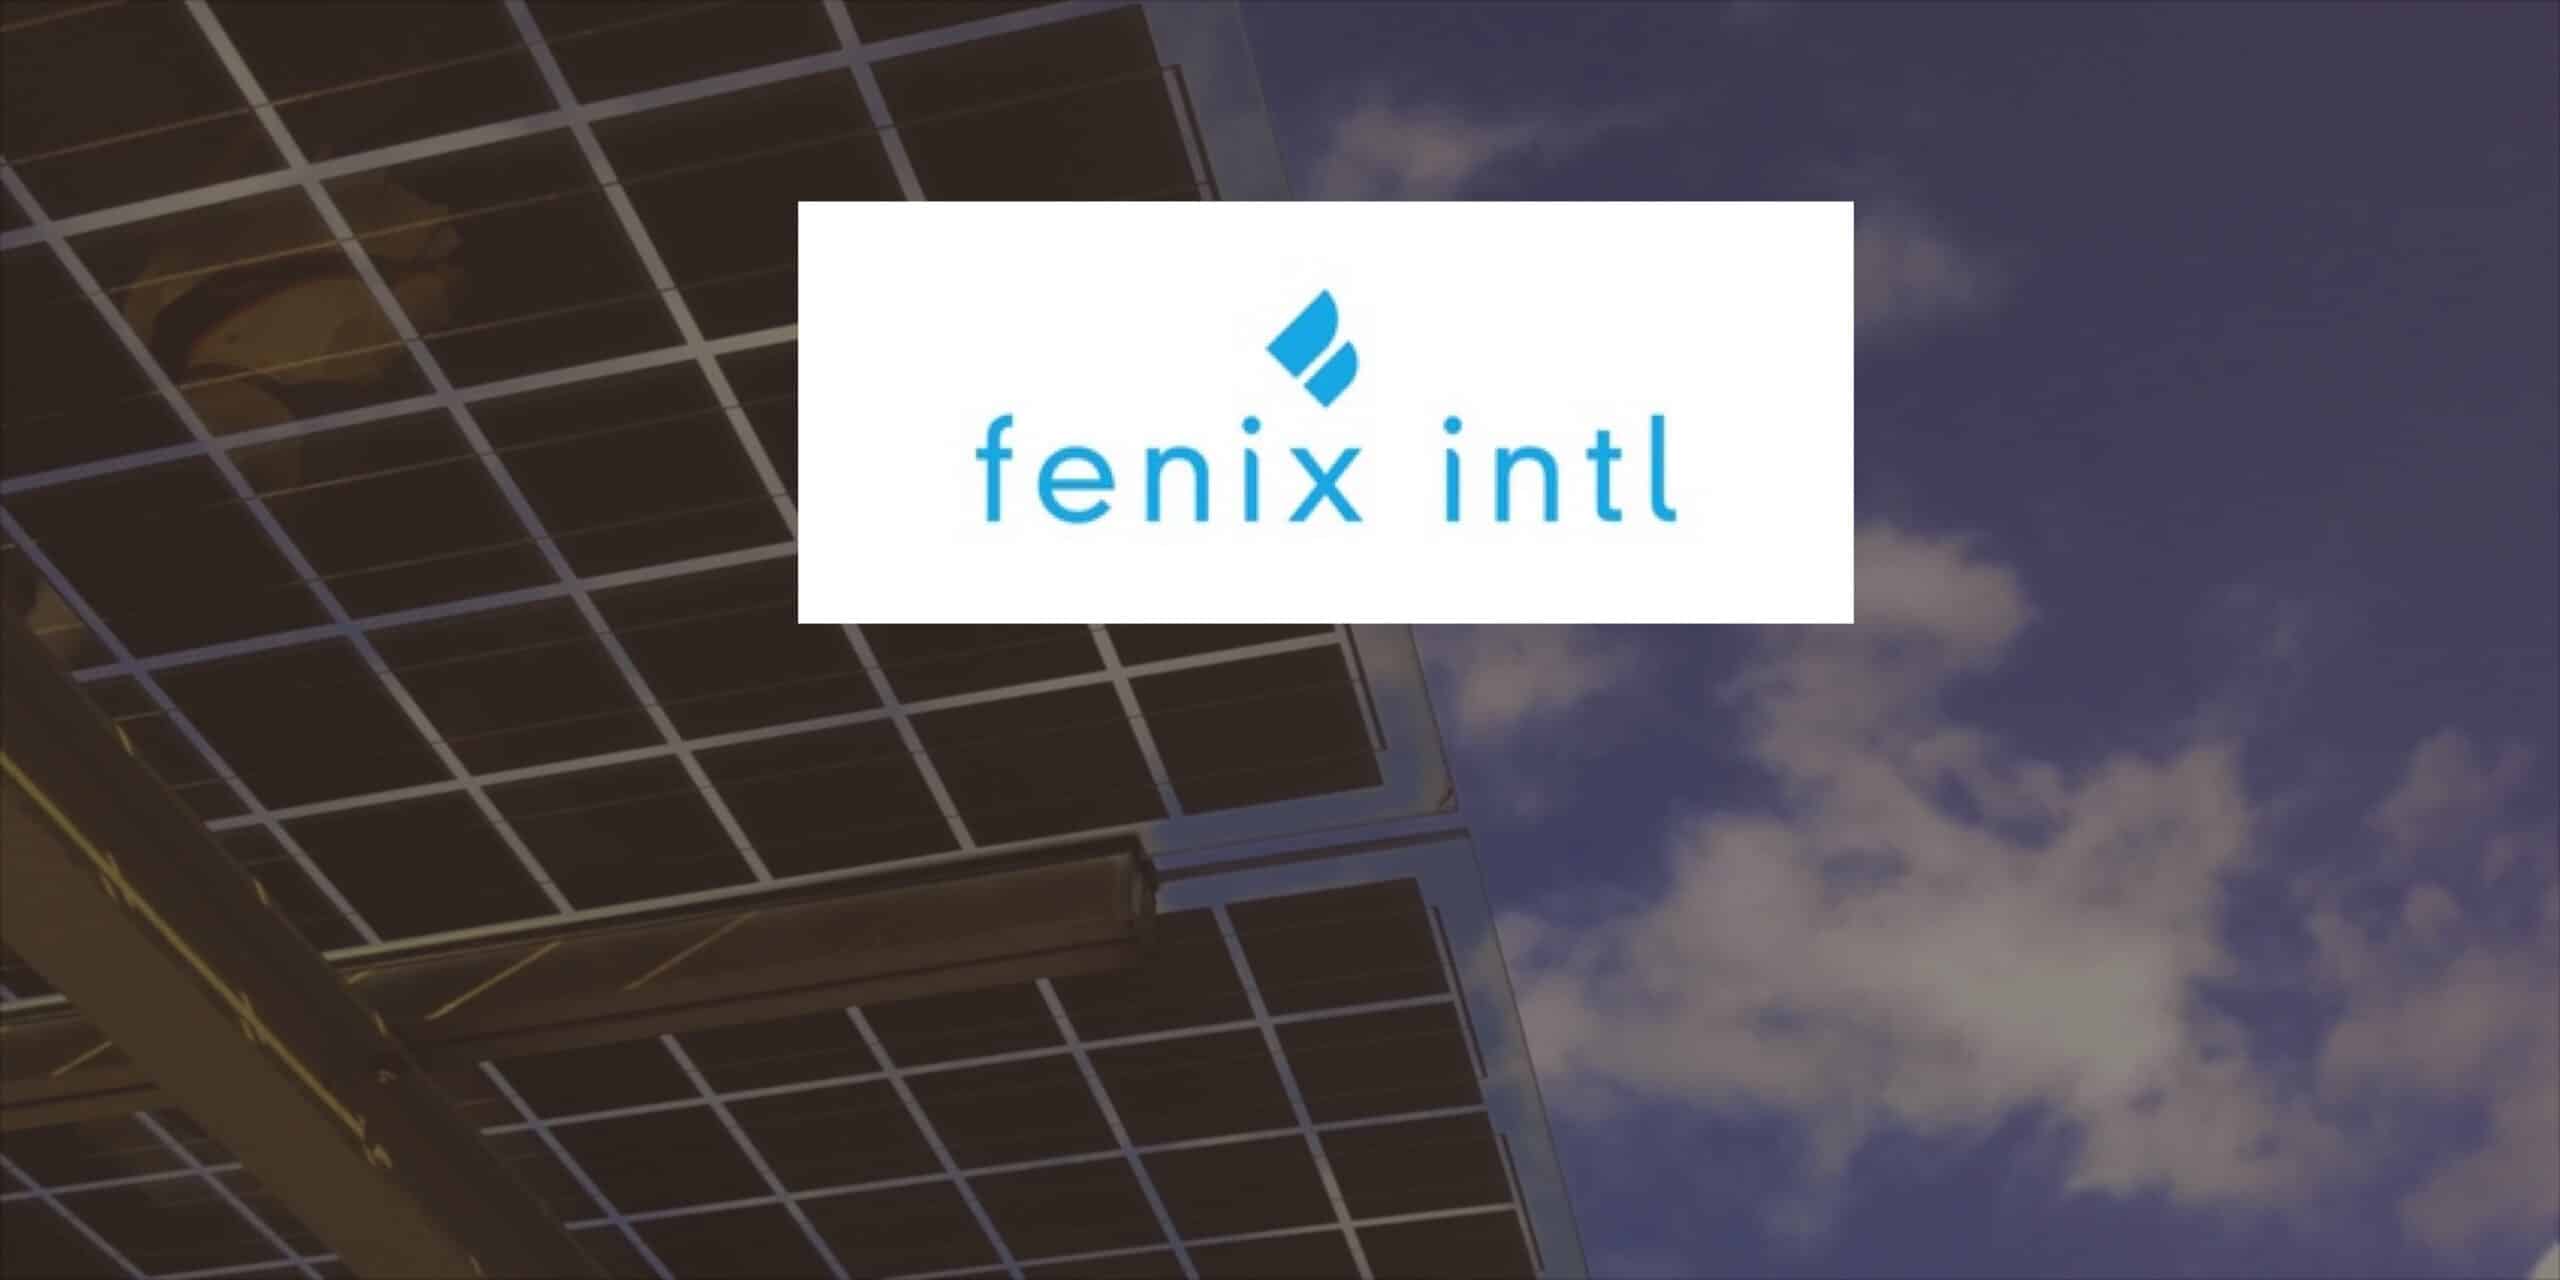 Fenix International – Competitive Intelligence and Process Benchmarking